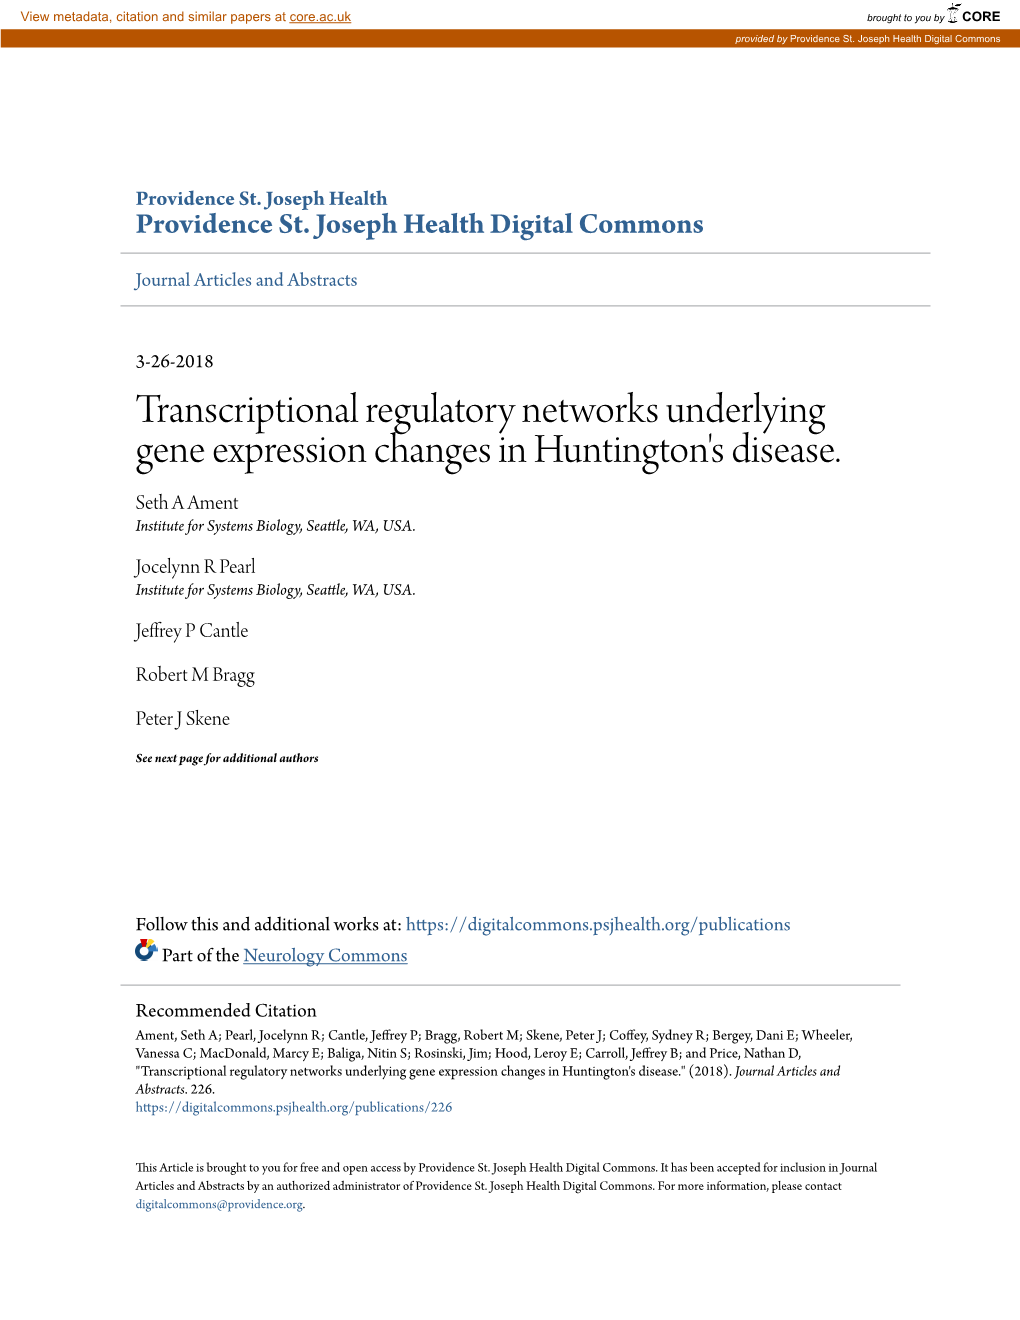 Transcriptional Regulatory Networks Underlying Gene Expression Changes in Huntington's Disease